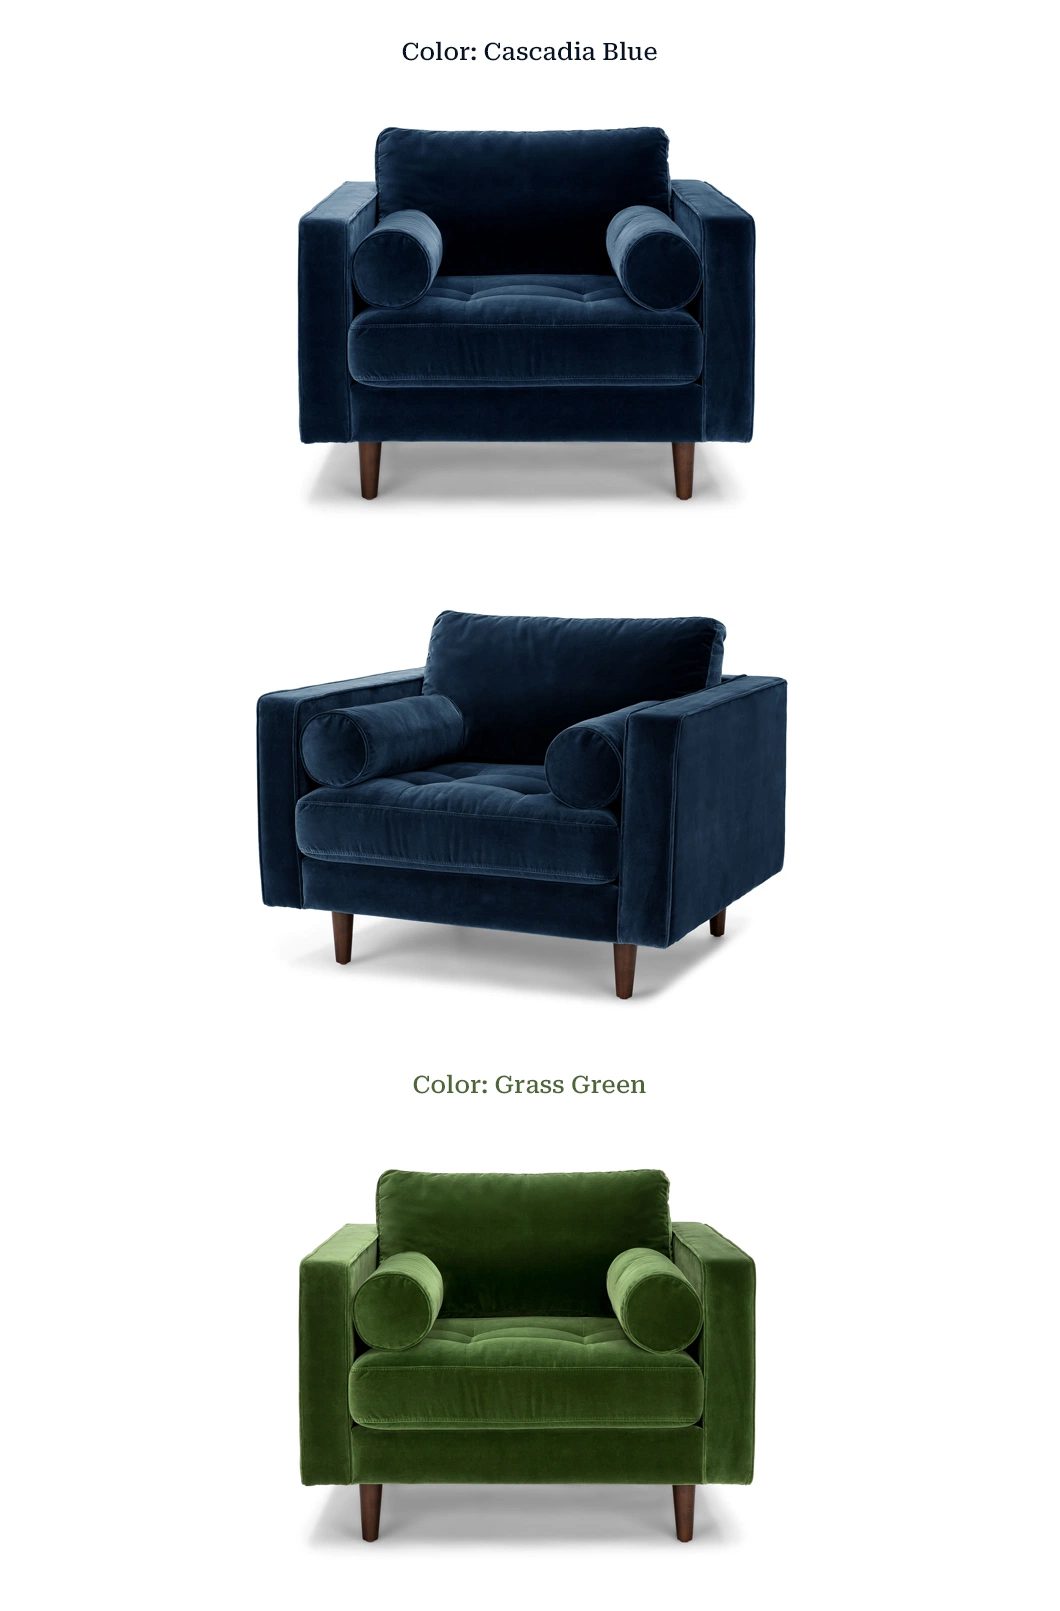 MID Century Modern Furniture Armchair Cozy Lounge Chair